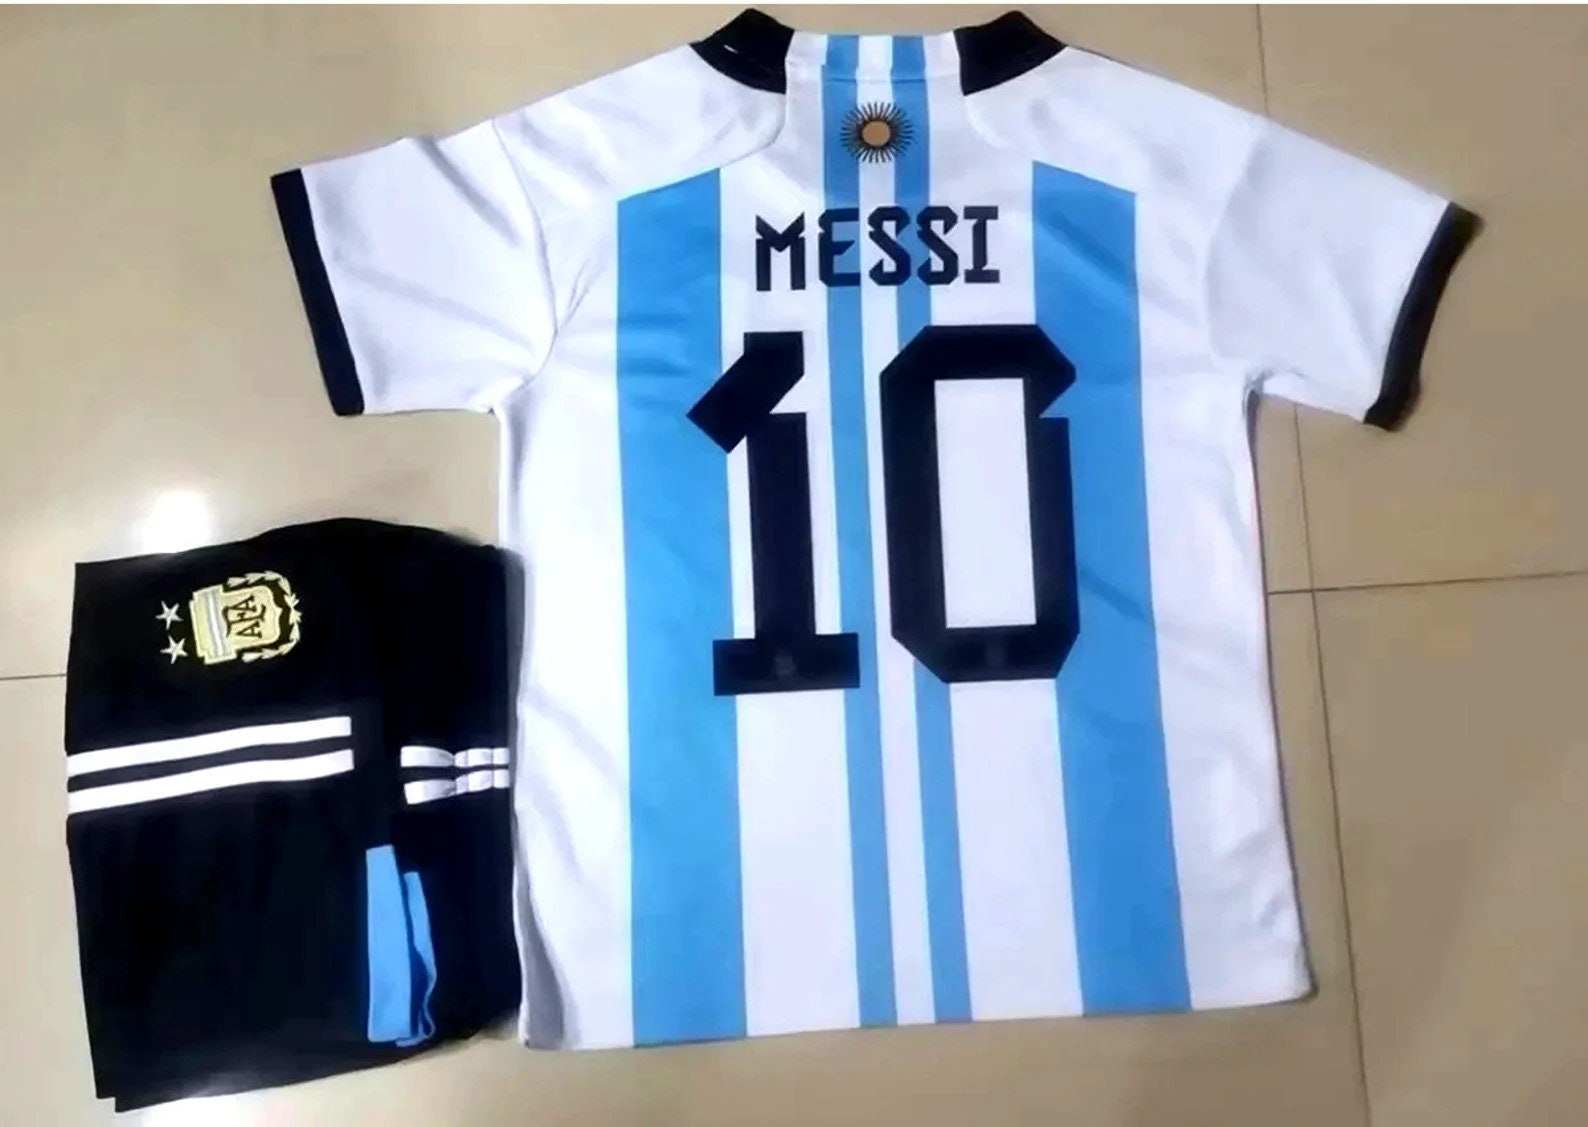 Argentina Messi Jersey Set / Argentina Soccer Uniform